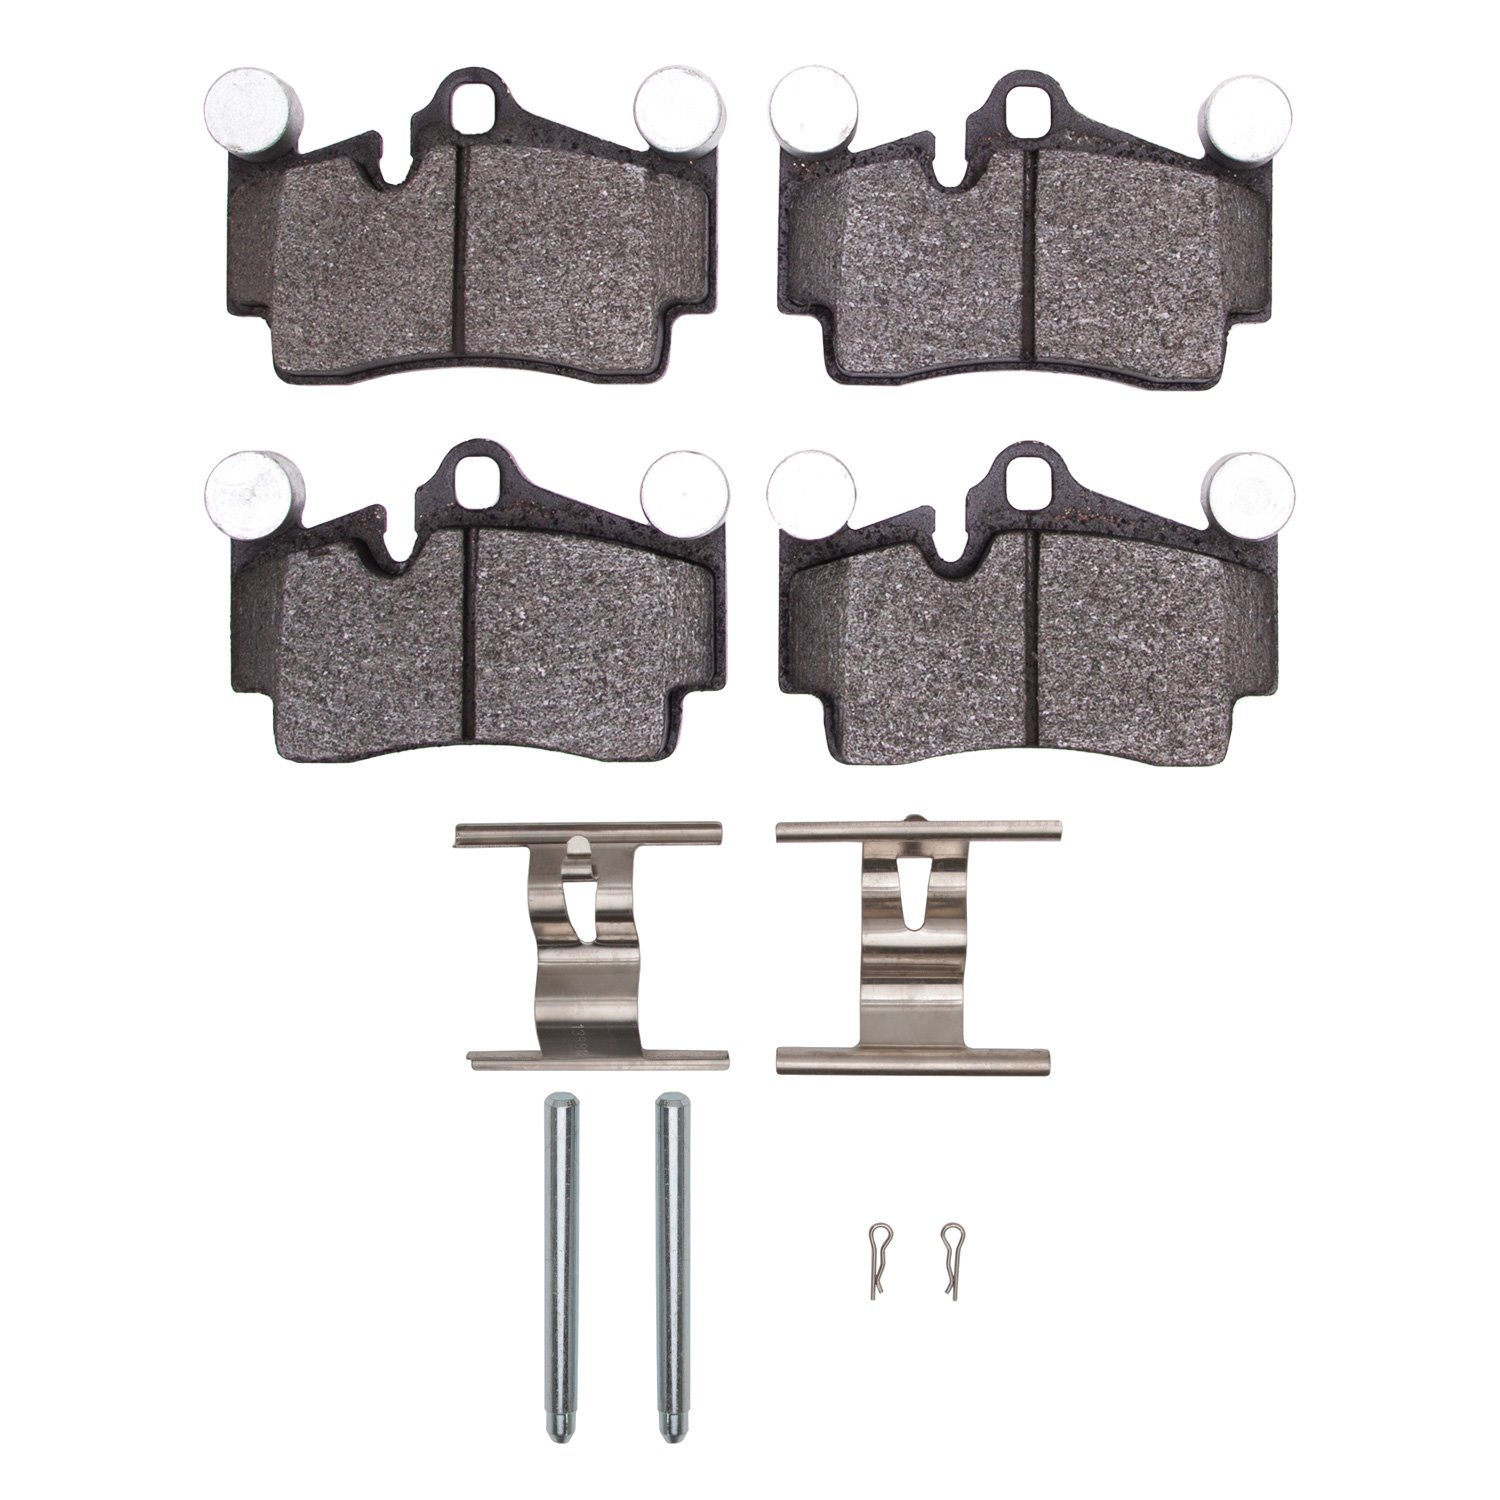 1551-0978-01 5000 Advanced Low-Metallic Brake Pads & Hardware Kit, 2003-2015 Multiple Makes/Models, Position: Rear